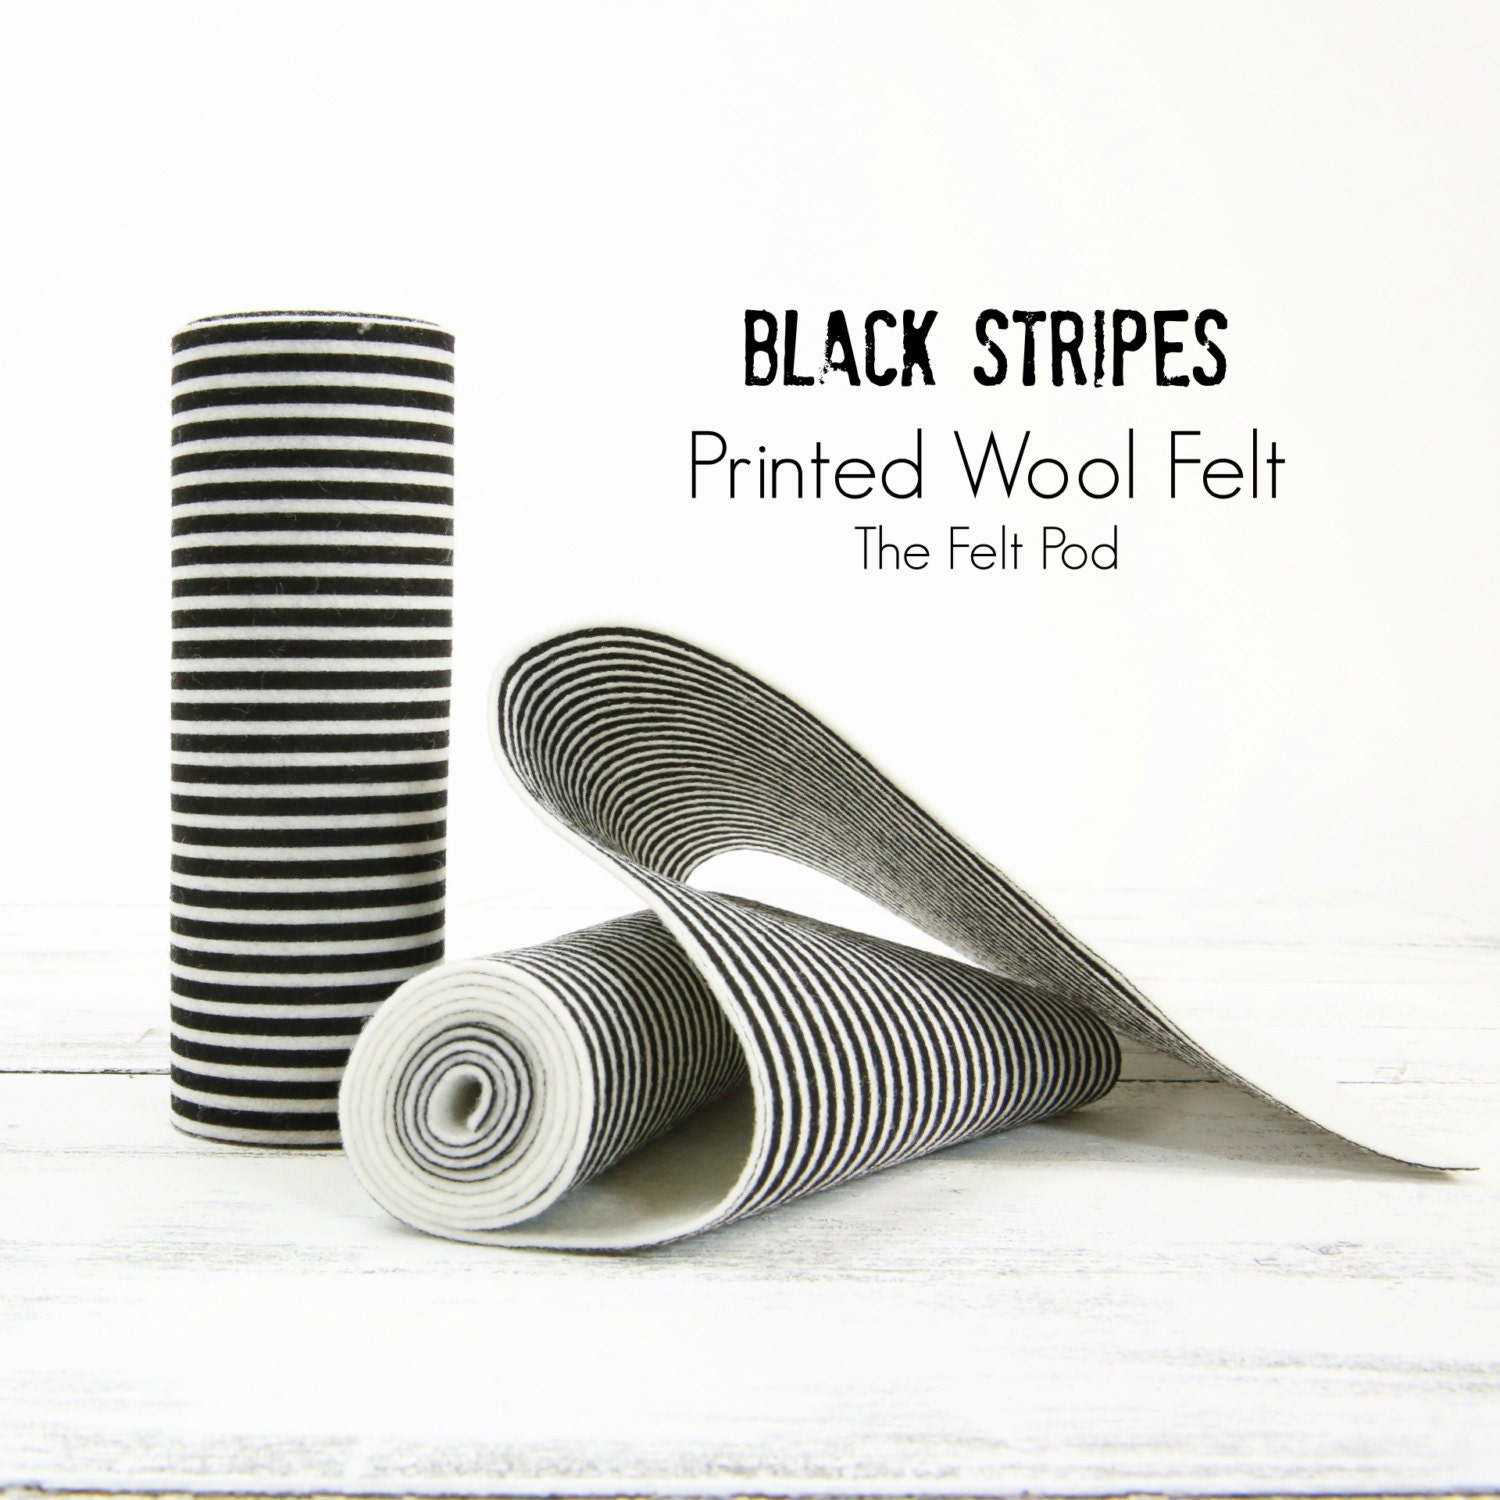 100% Wool Felt Fabric - 1 Yard x 1/2 Yard (36 x 18) - 5mm Thick - Made in  Western Europe - Natural Light Grey